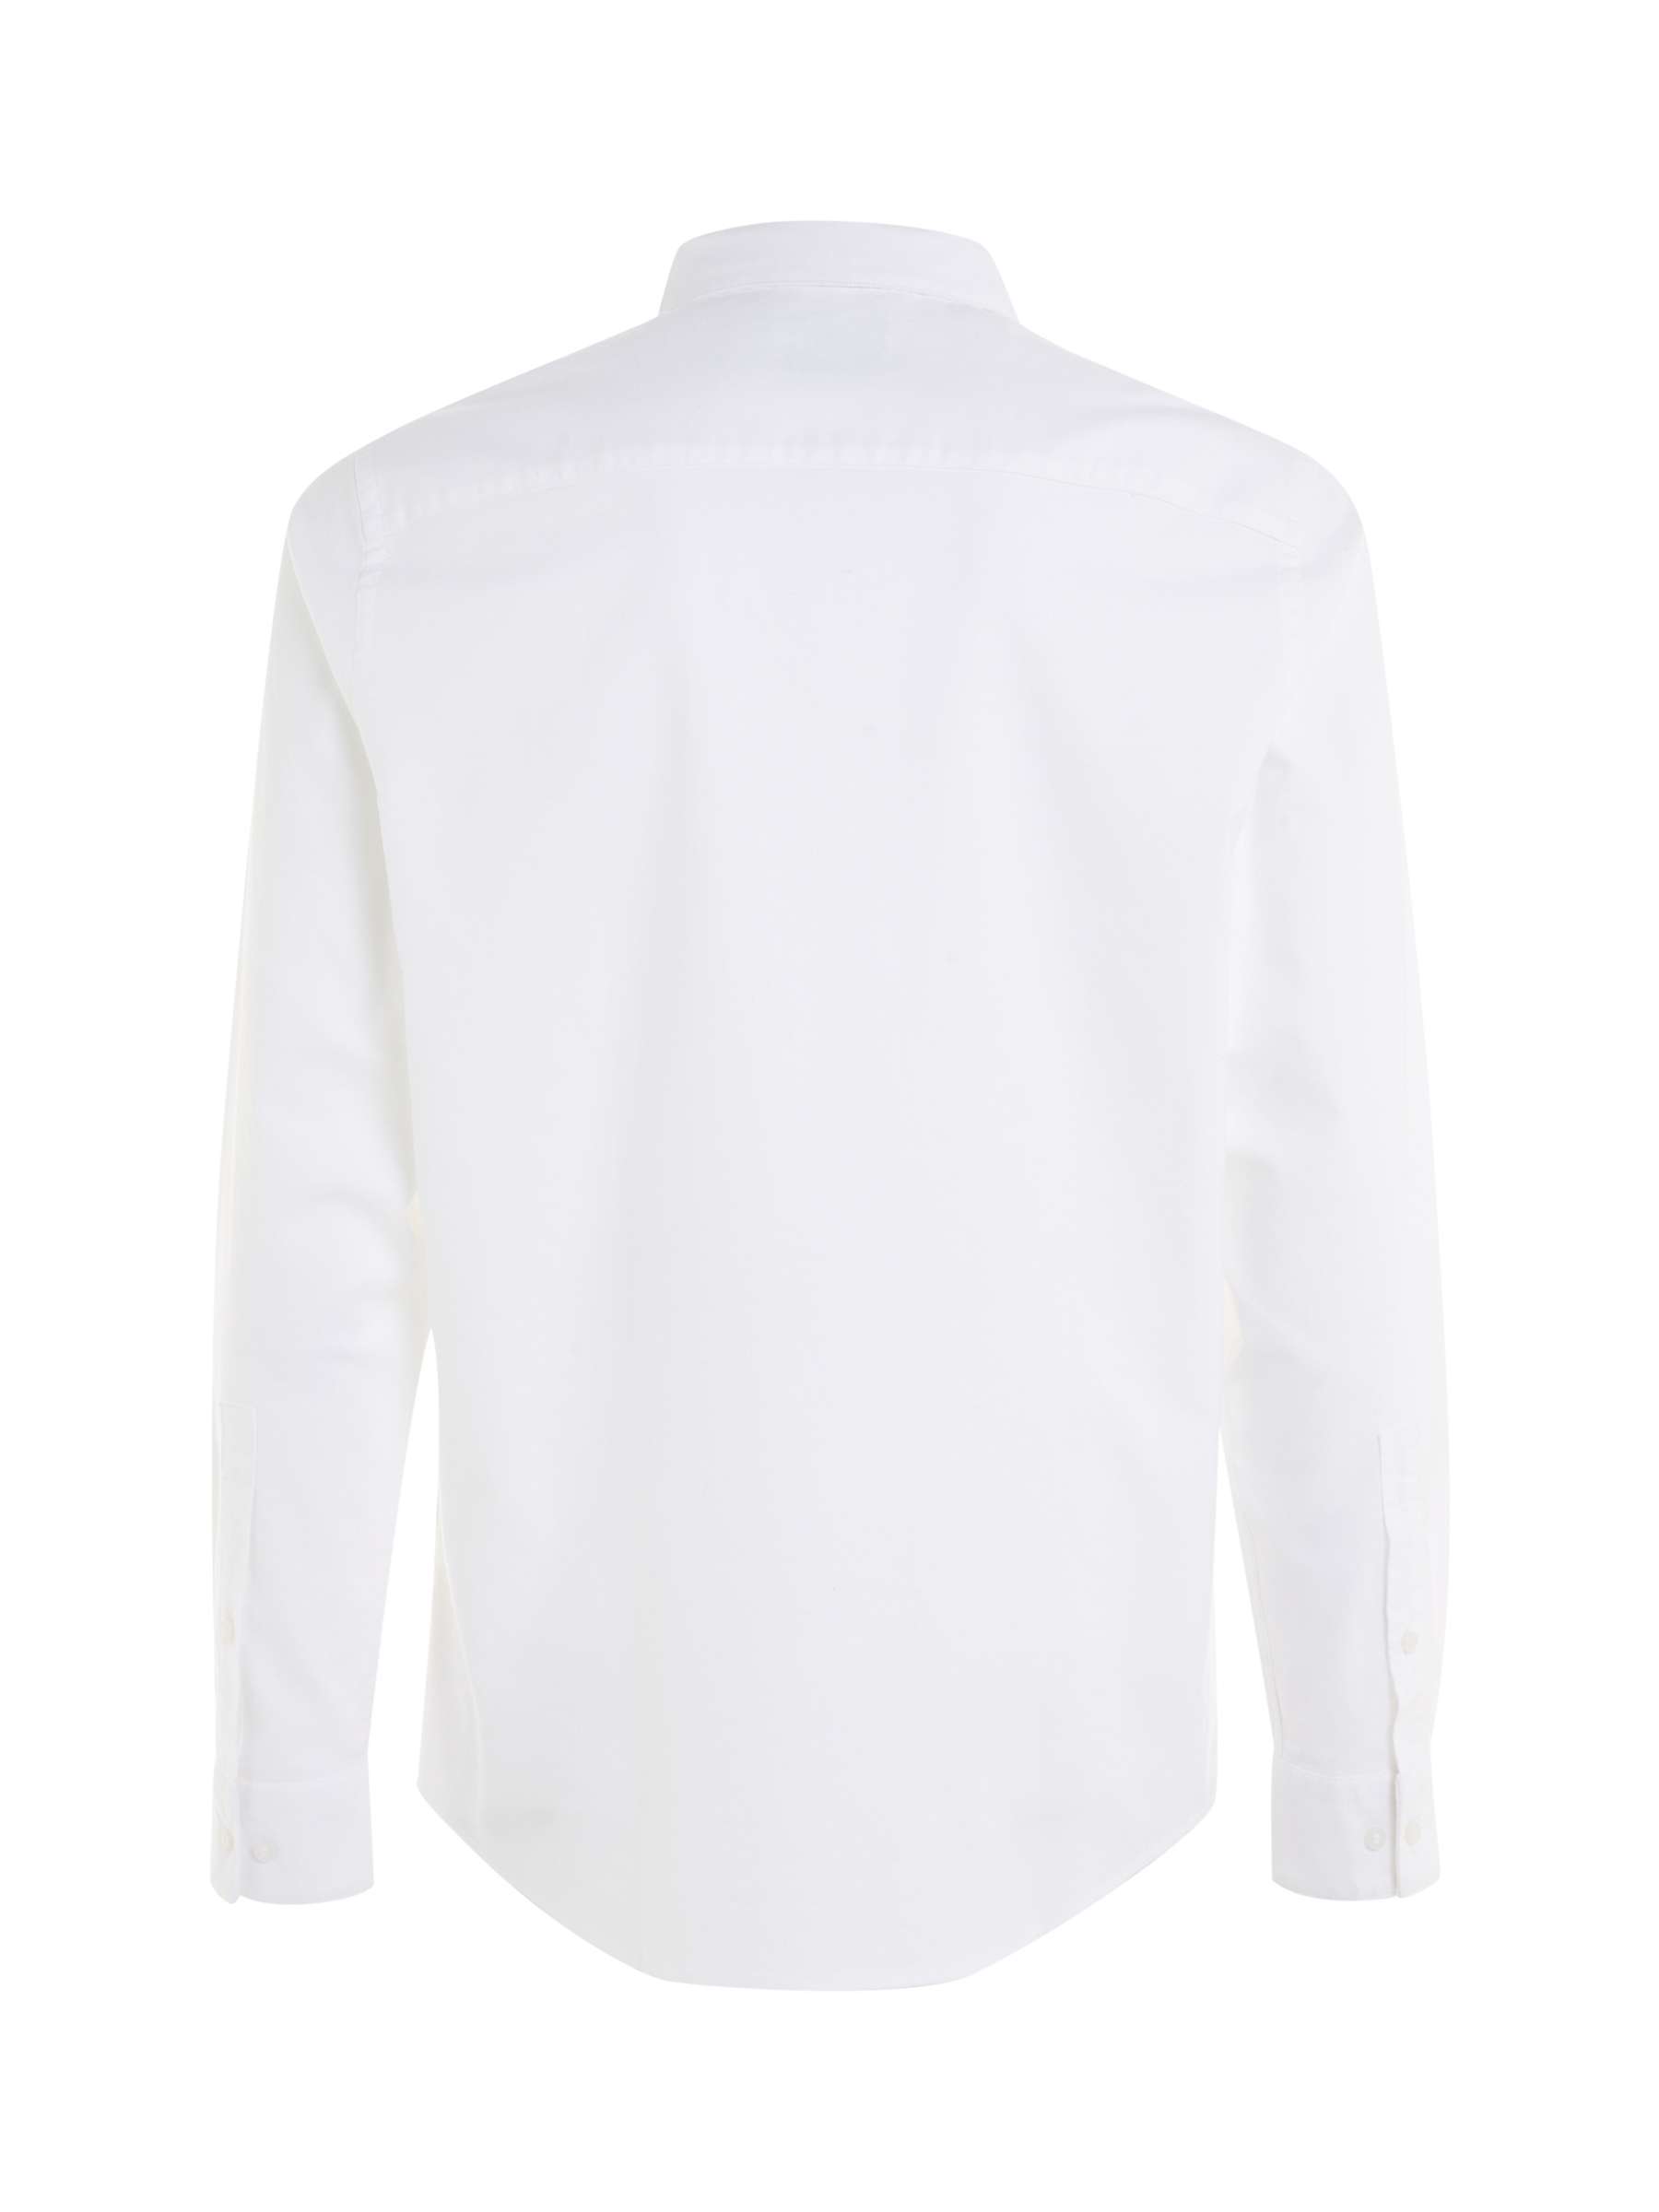 Buy Calvin Klein Stretch Oxford Long Sleeve Shirt, White Online at johnlewis.com